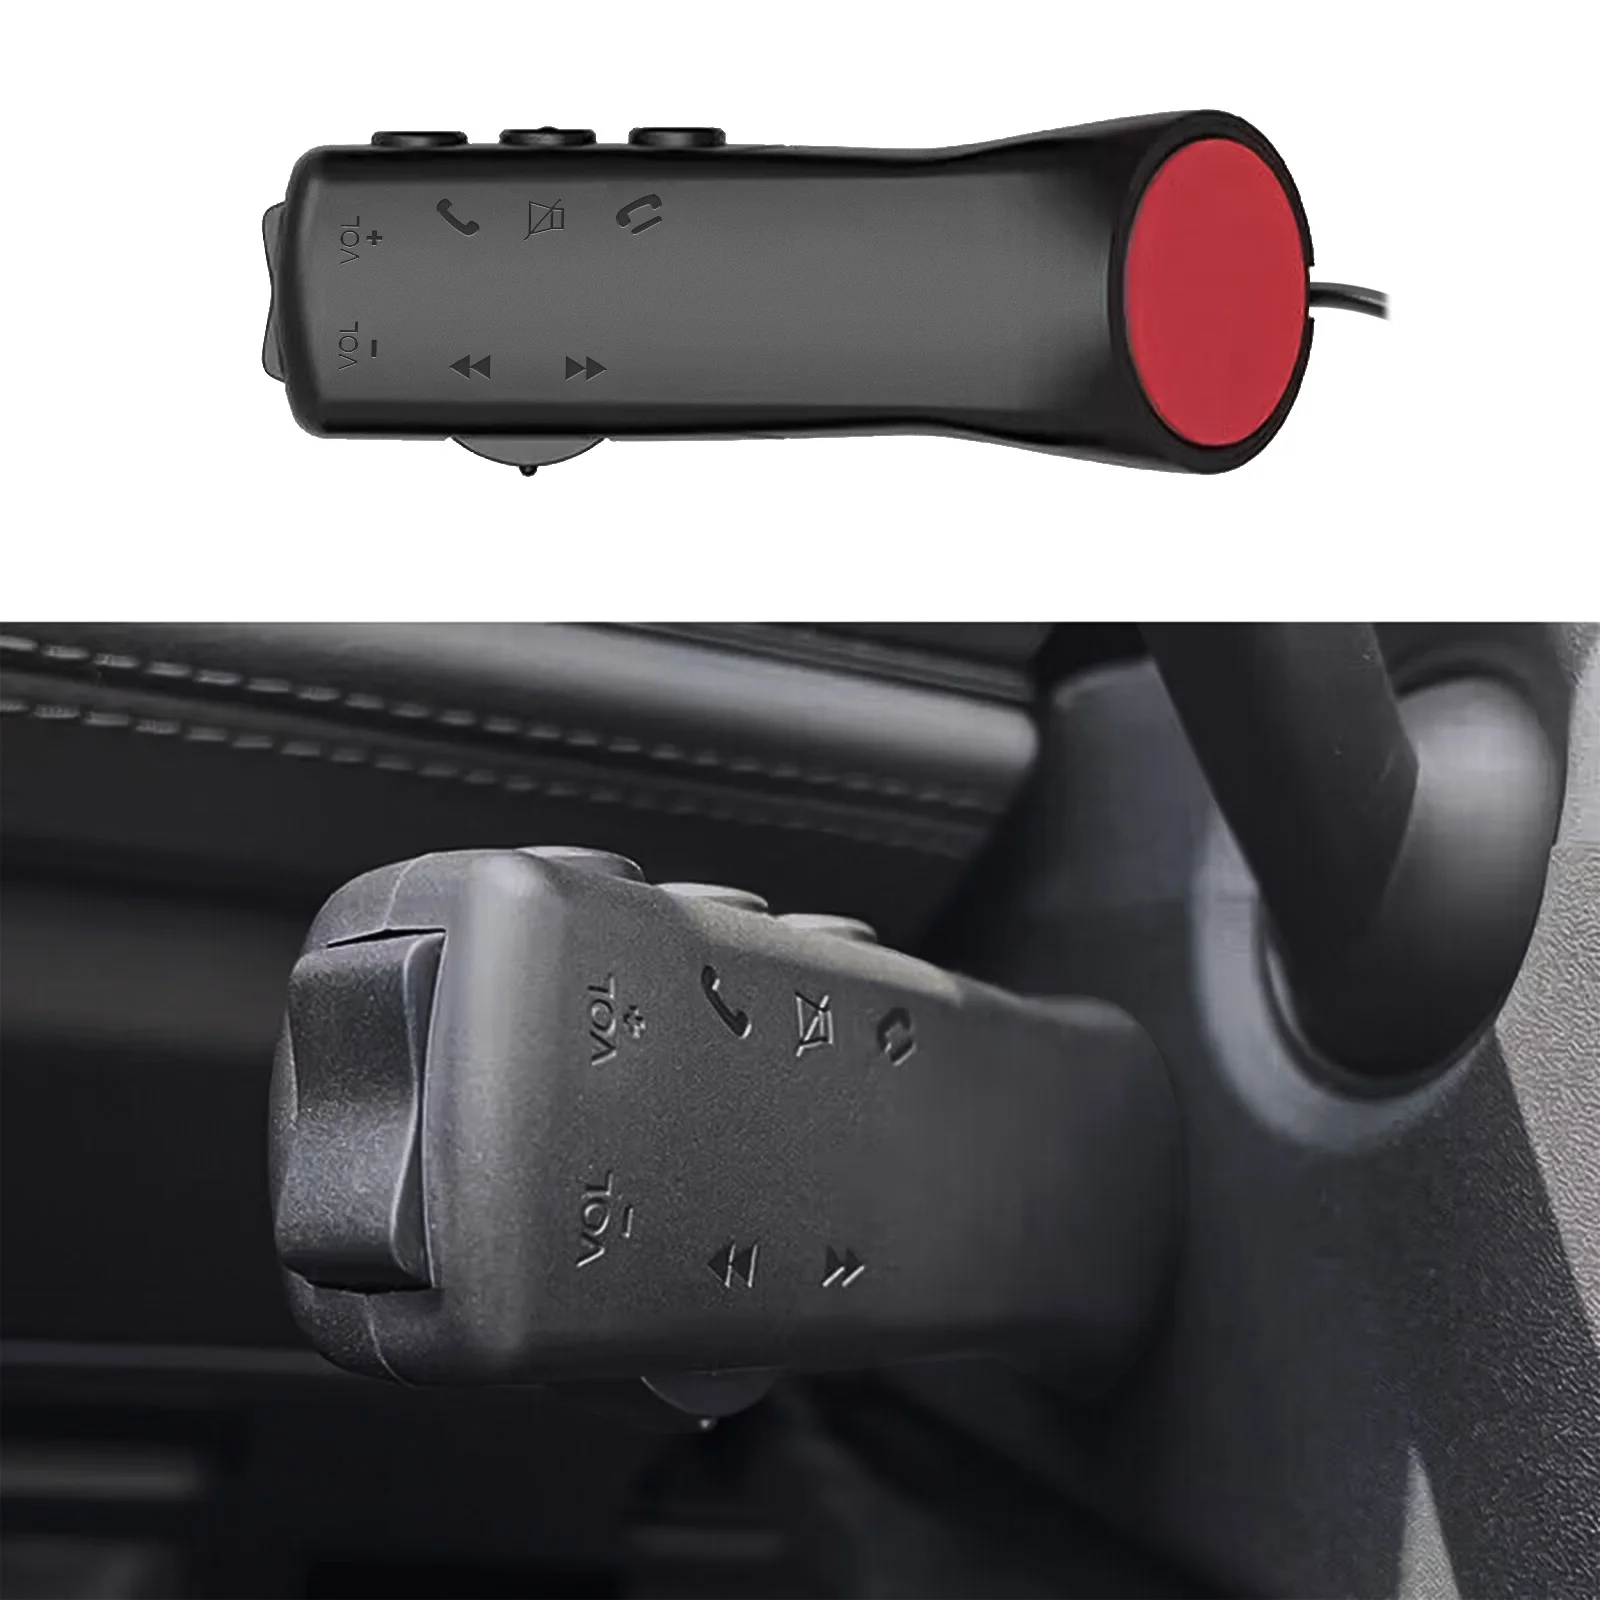 

7 Keys Car Steering Wheel Button Remote Controller for Car Radio DVD GPS Multimedia Navigation Head Unit Remote Control Button